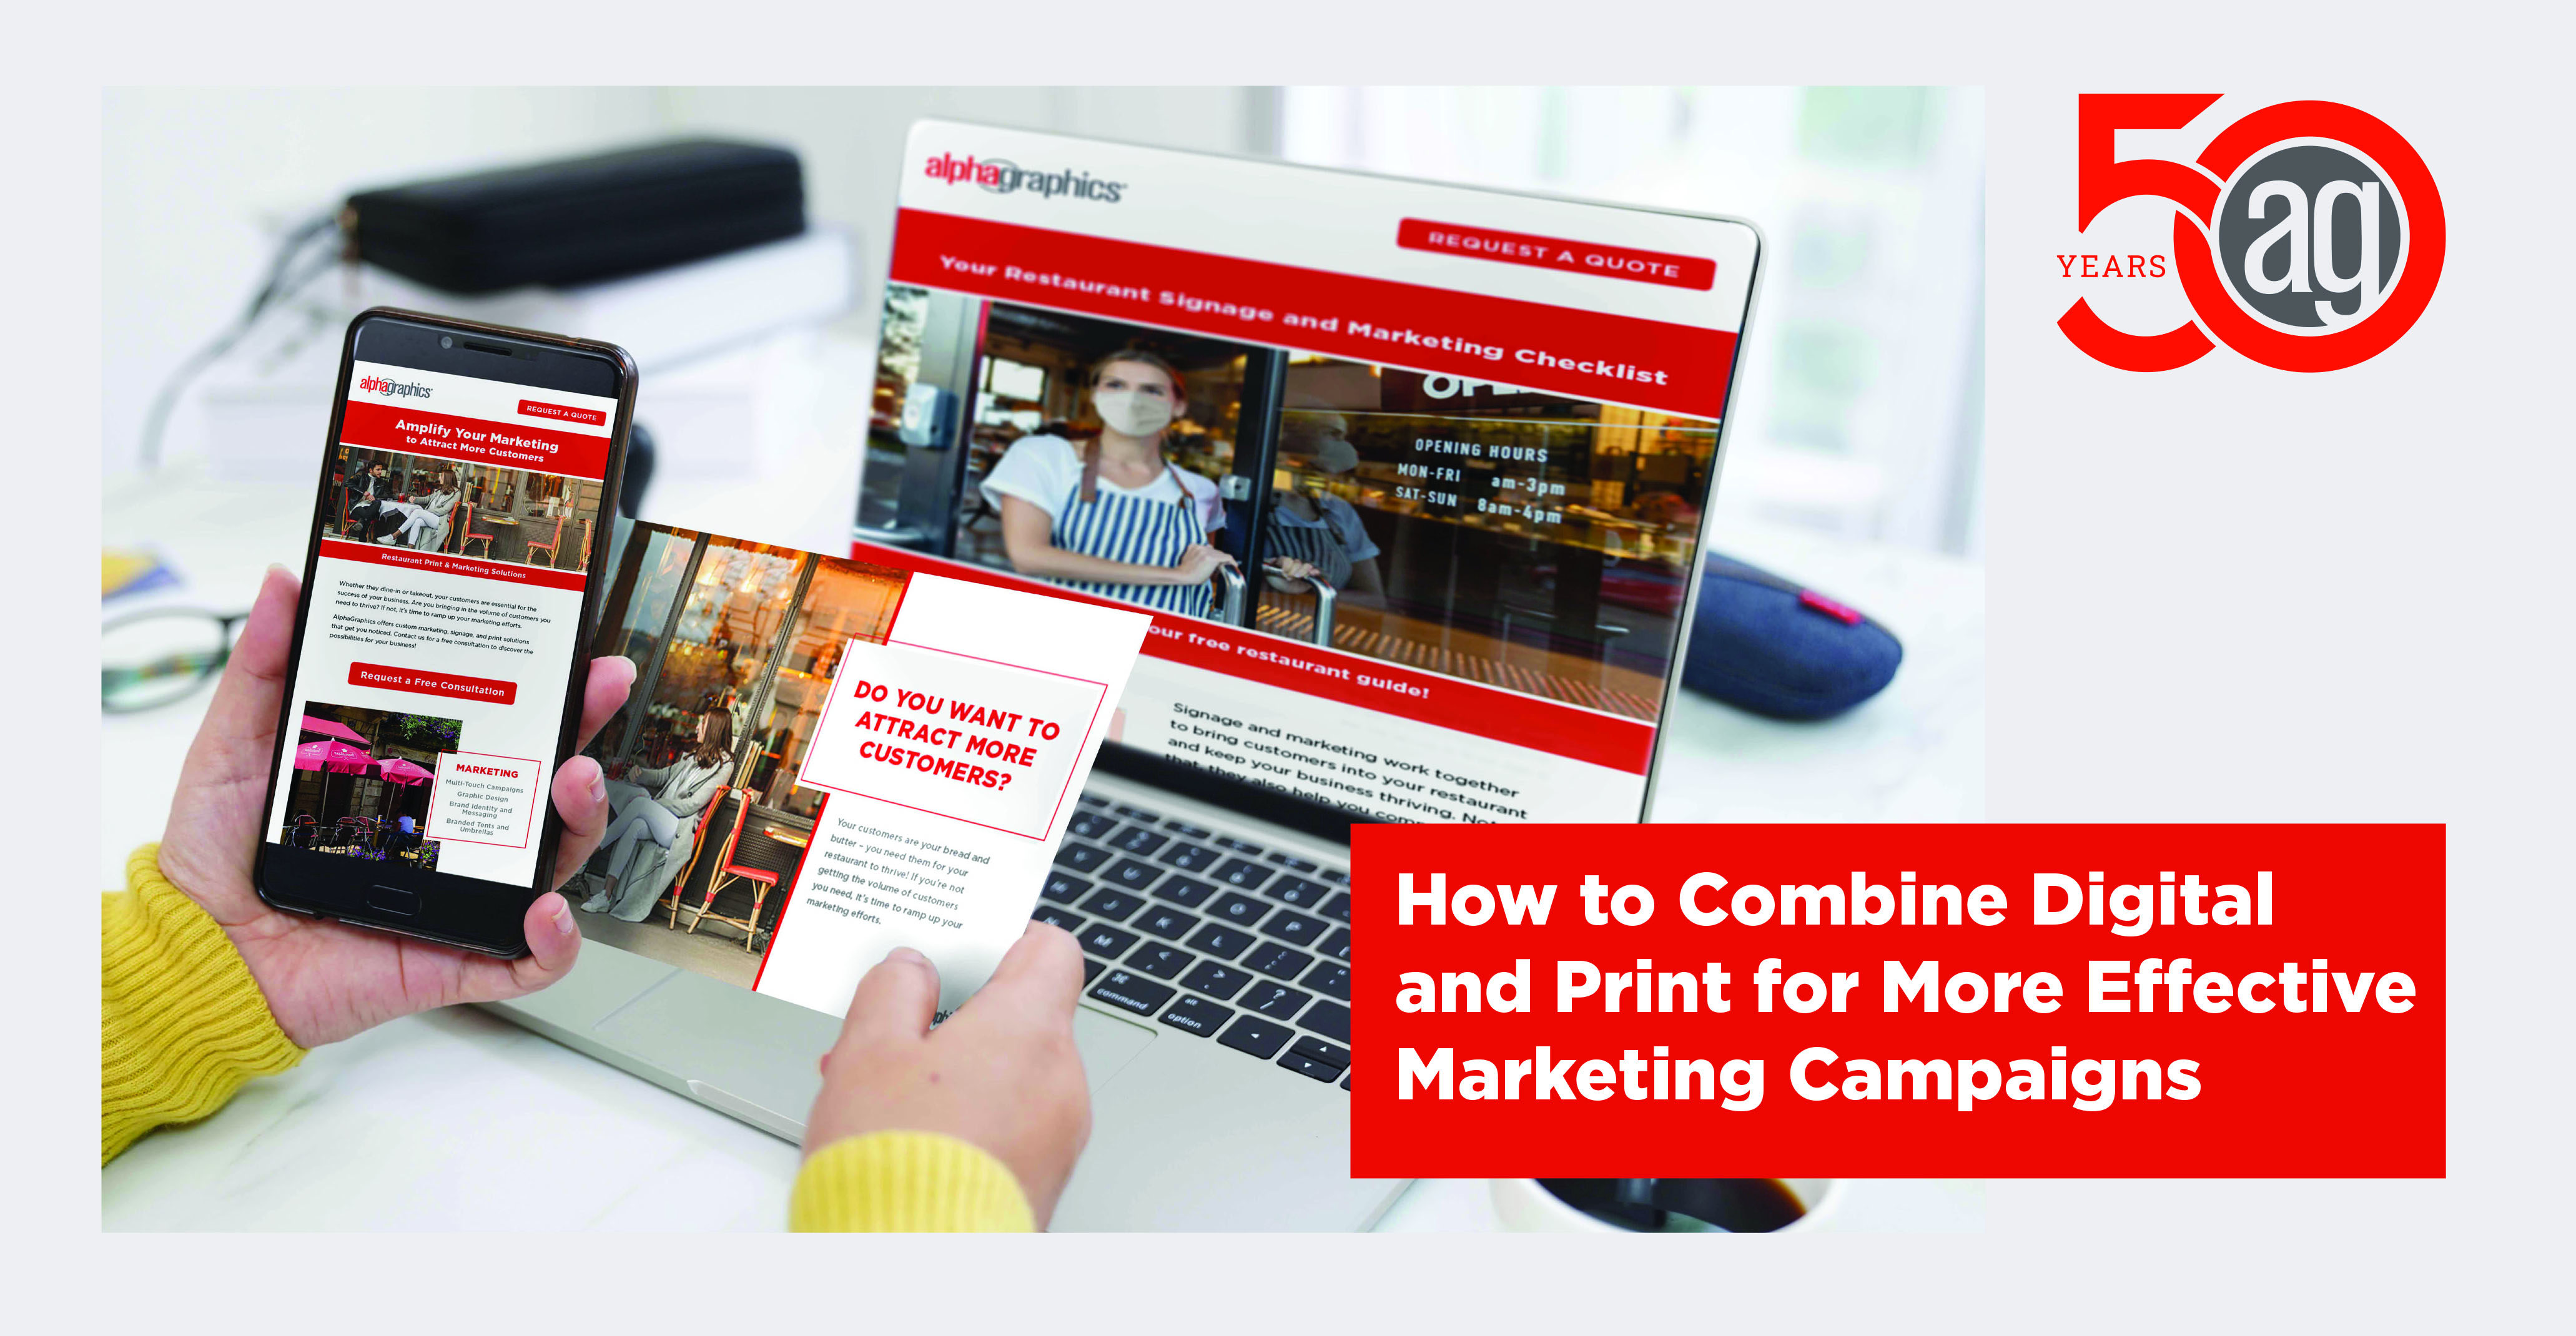 Combine digital and print marketing